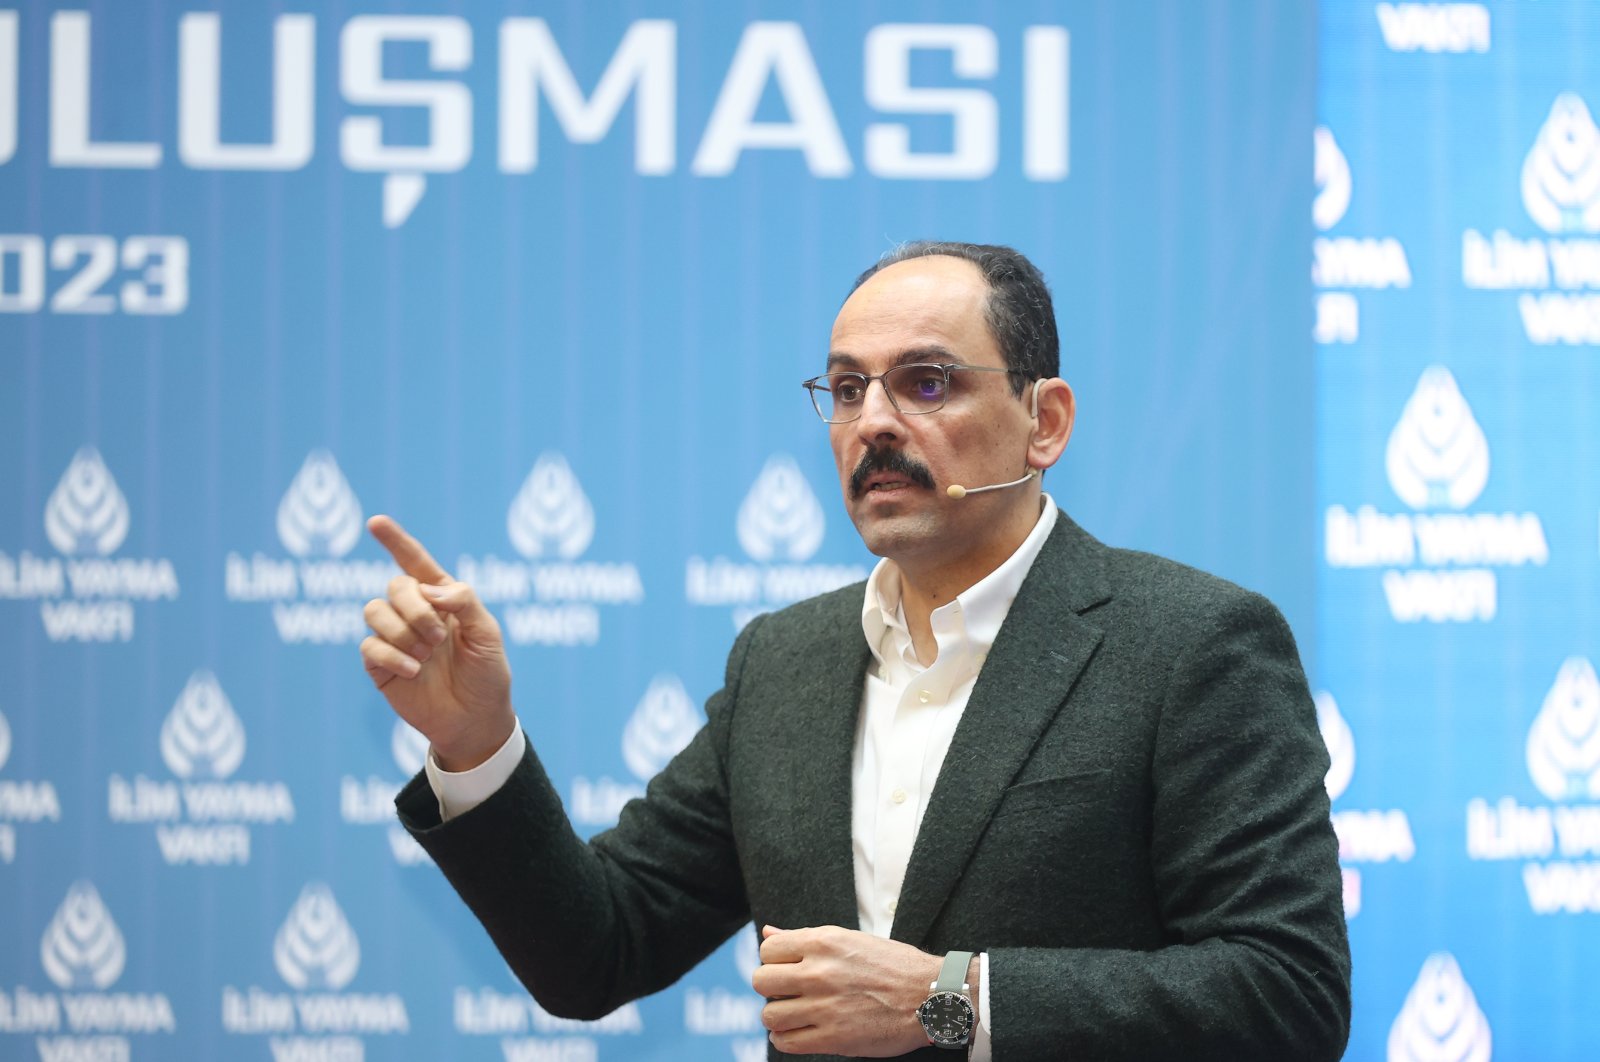 Presidential Spokesperson Ibrahım Kalın speaks at a conference at Istanbul Sabahattin Zaim University, Jan. 7, 2023. (AA Photo)